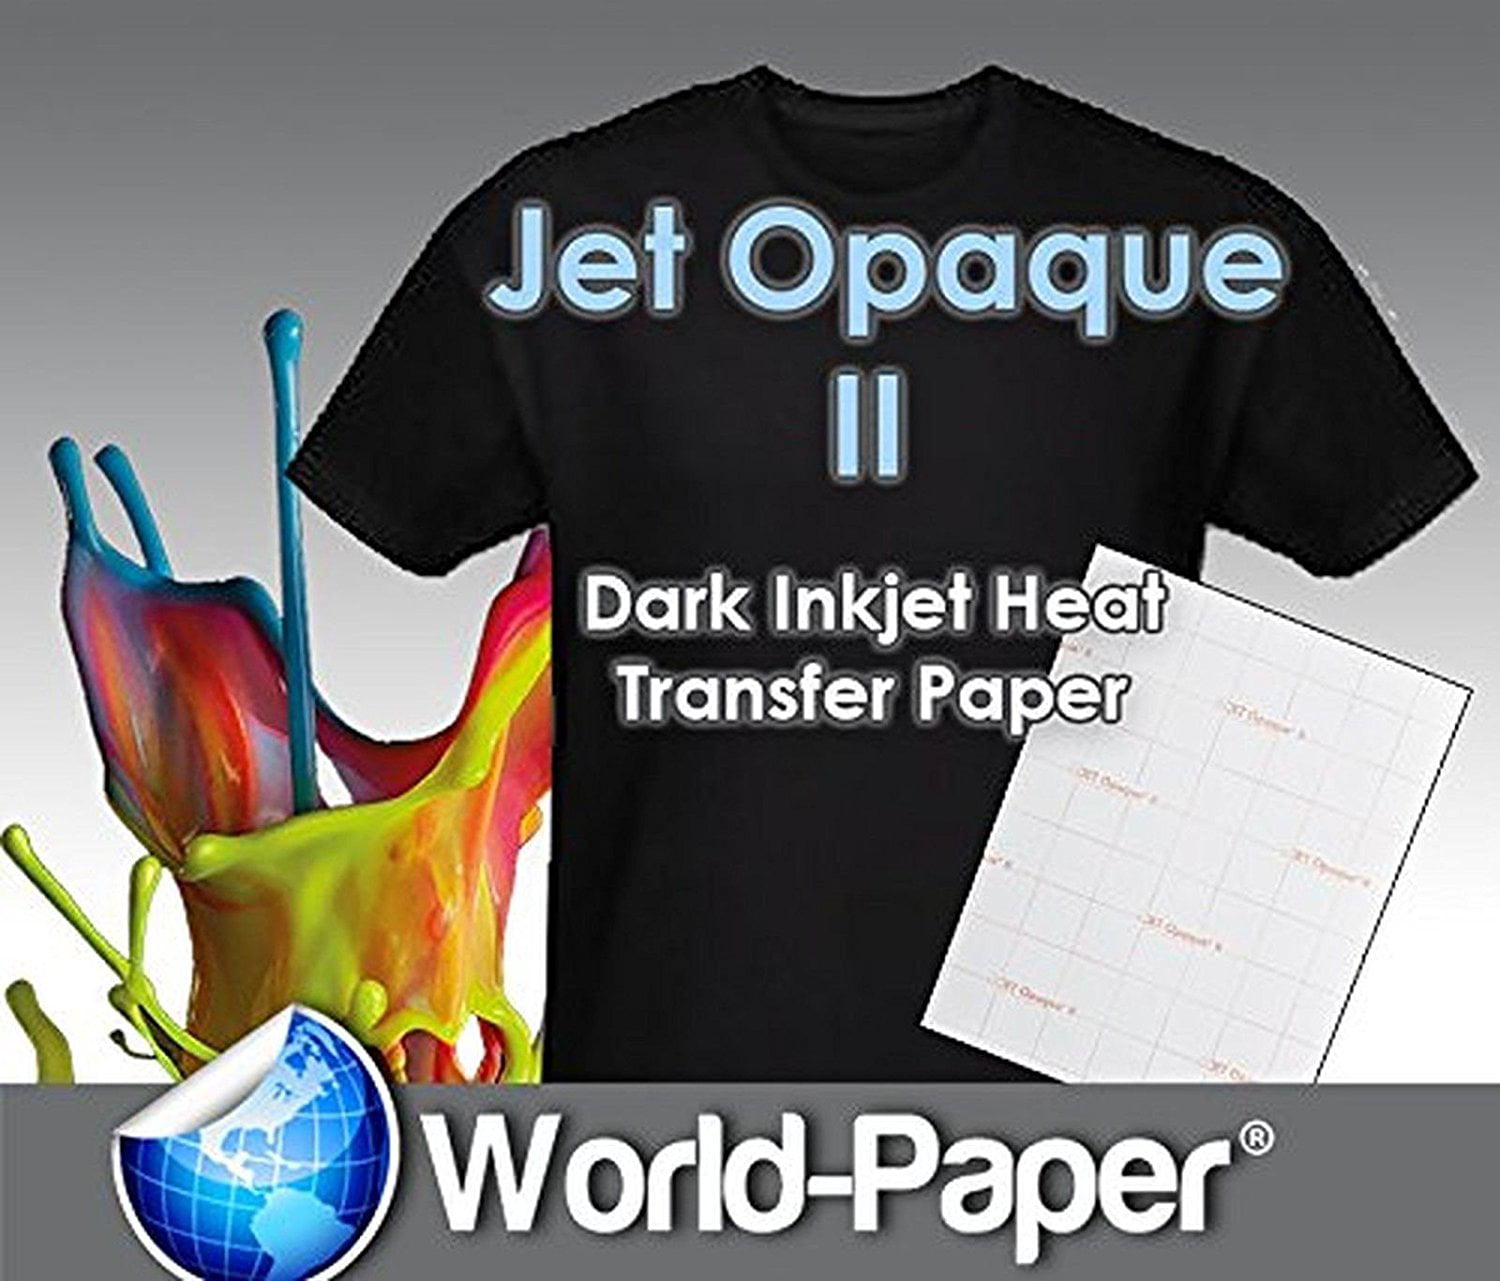 10 Sheets Jet Opaque II Heat Transfer Paper for Dark 8.5 x 11 